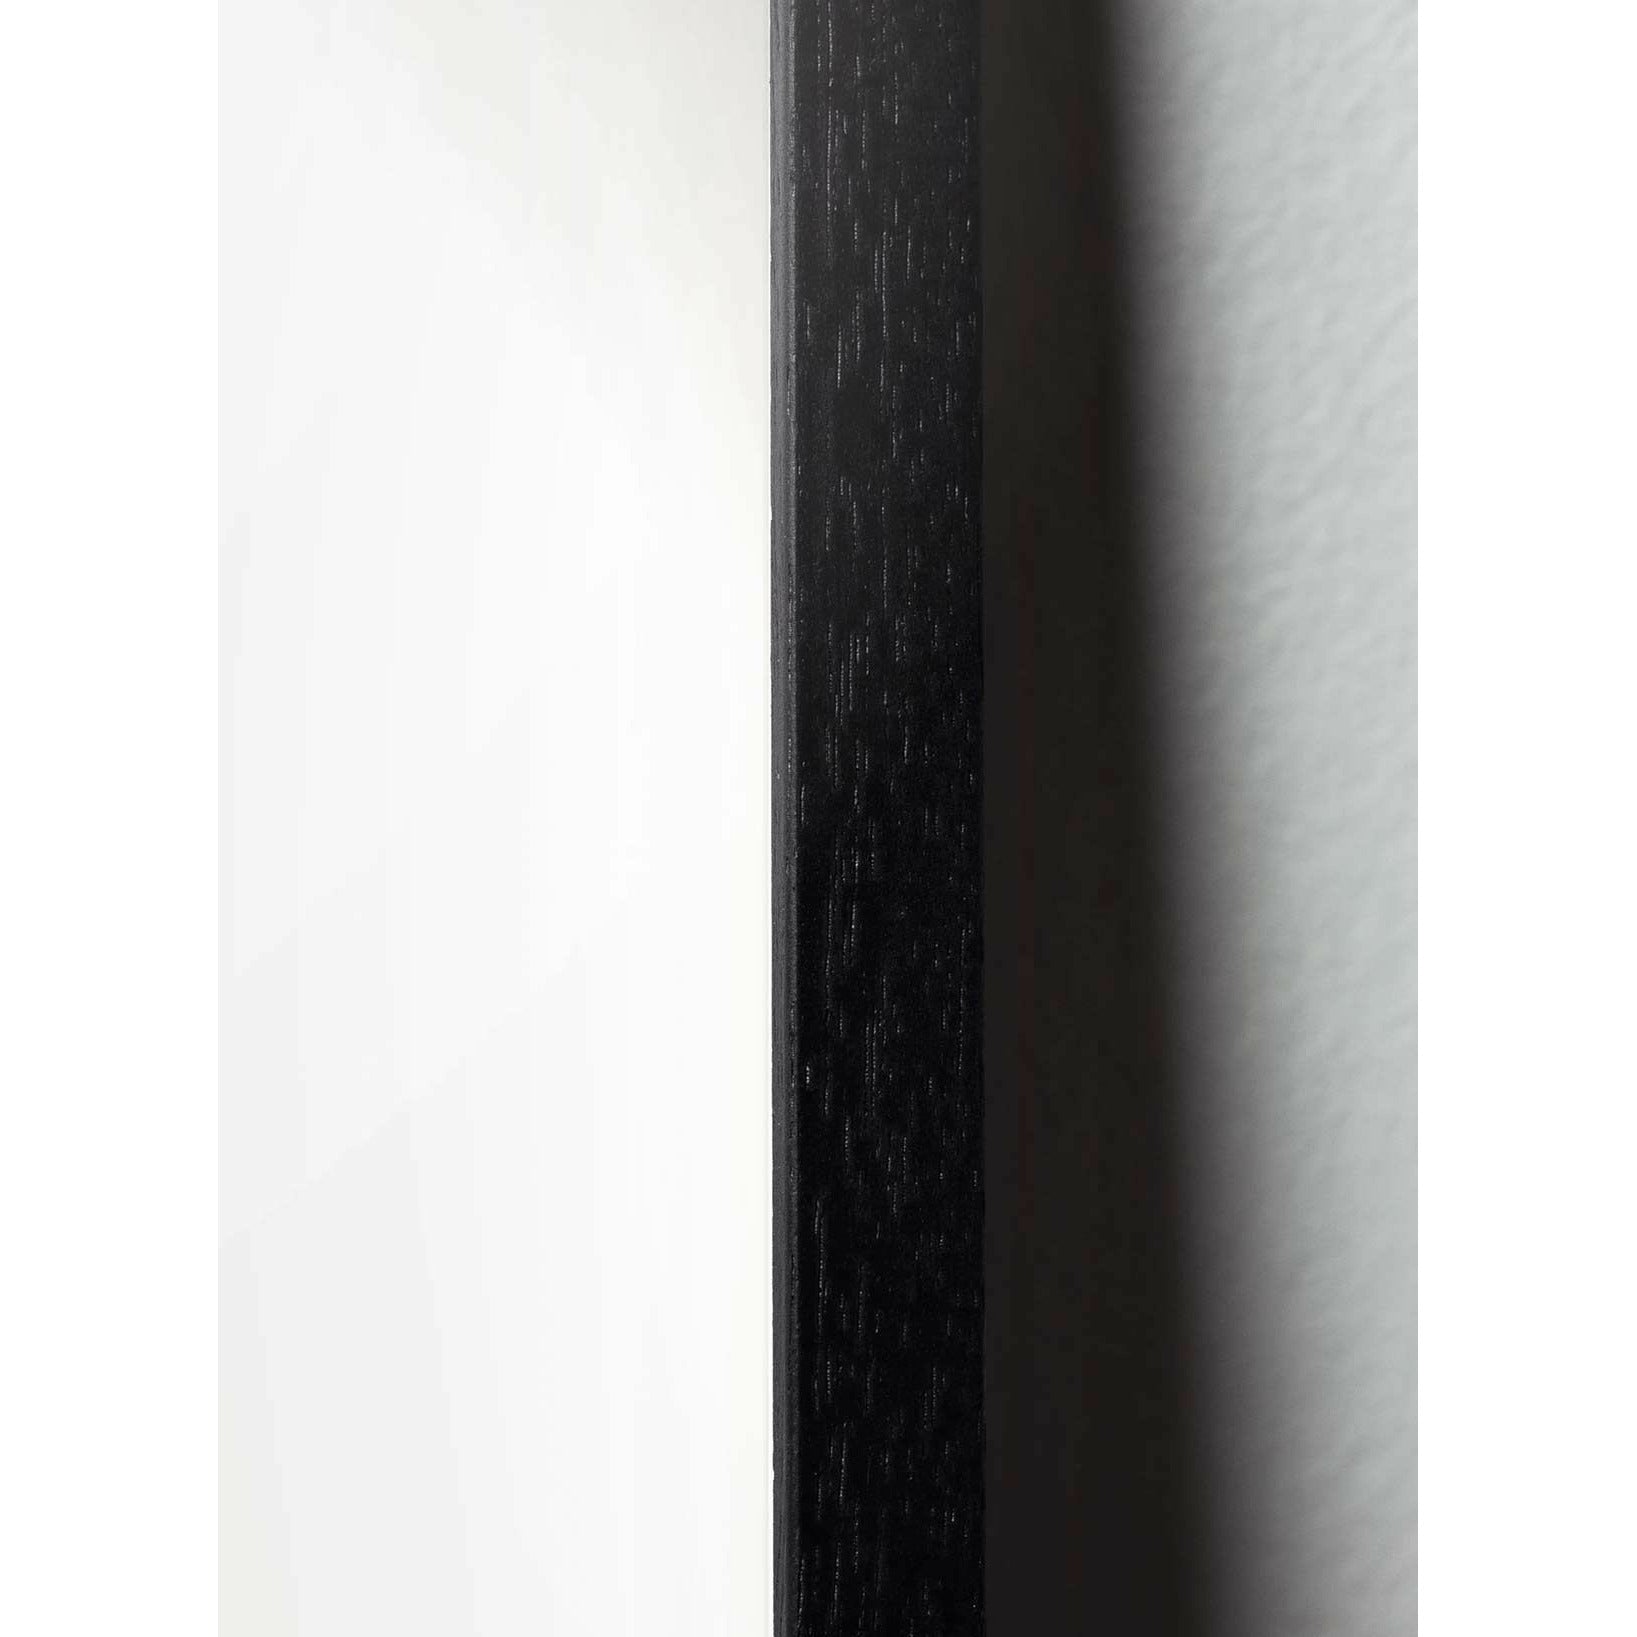 Póster de desfile de swan de creación, marco hecho de madera lacada negra, 70x100 cm